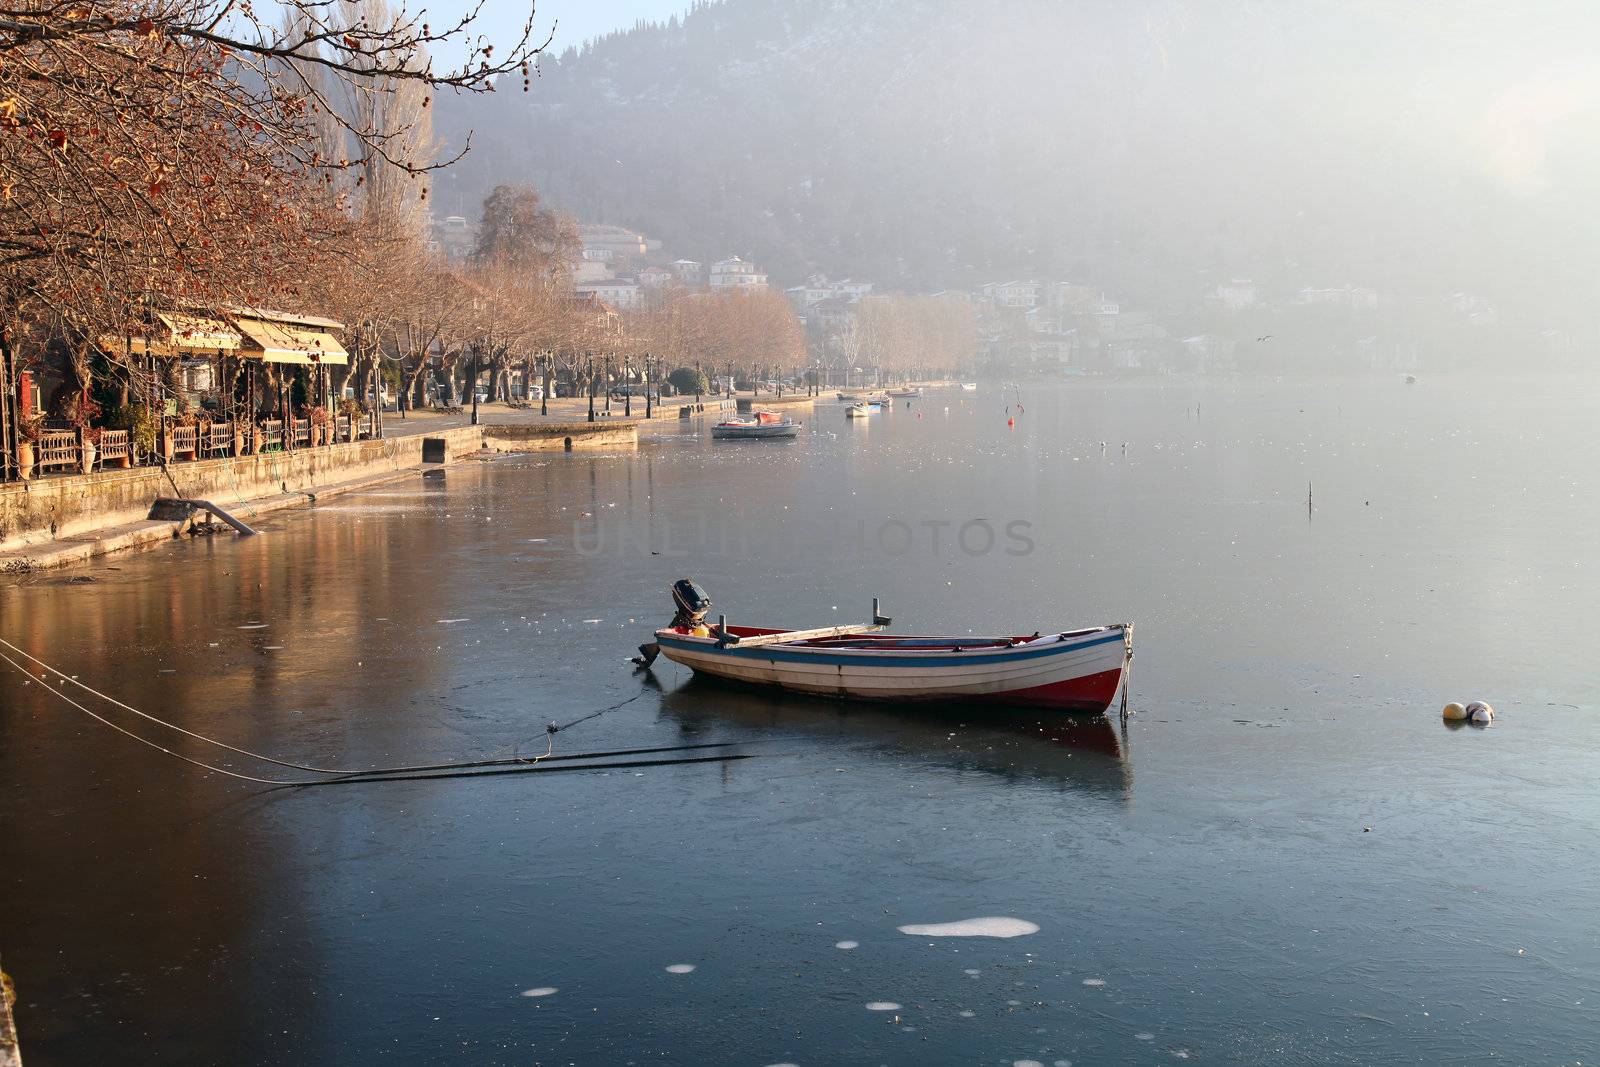 Boat in the lake by smixiotis_dimitrios